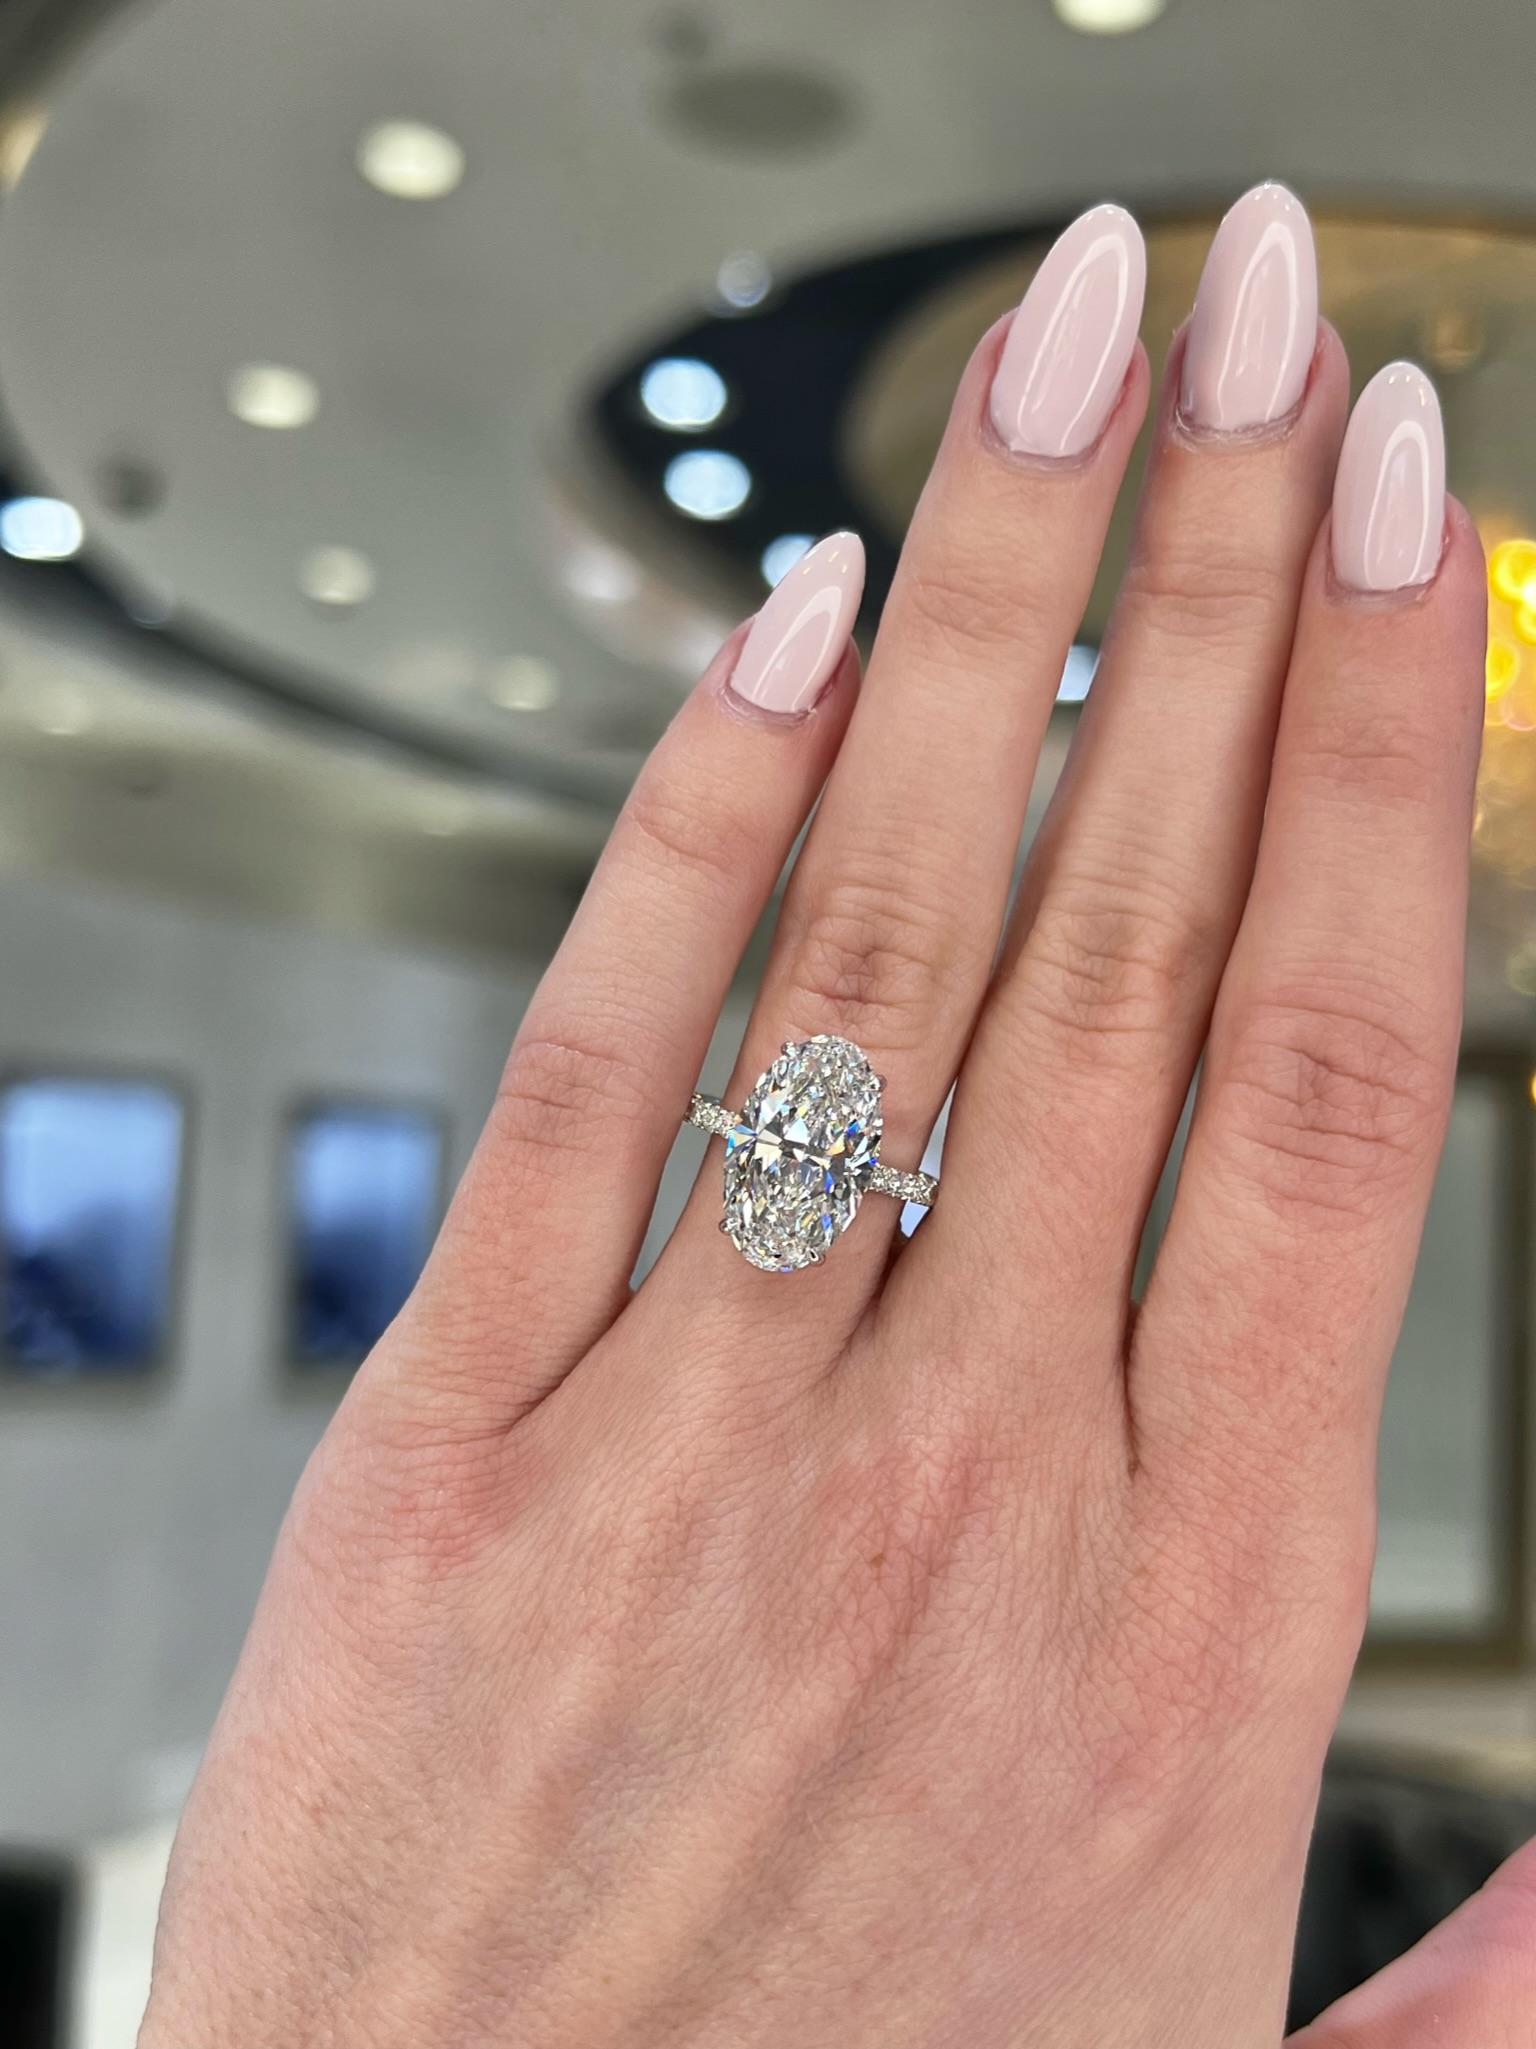 David Rosenberg 5.18 Carat Oval Shape D/SI2 GIA Diamond Engagement Wedding Ring For Sale 2